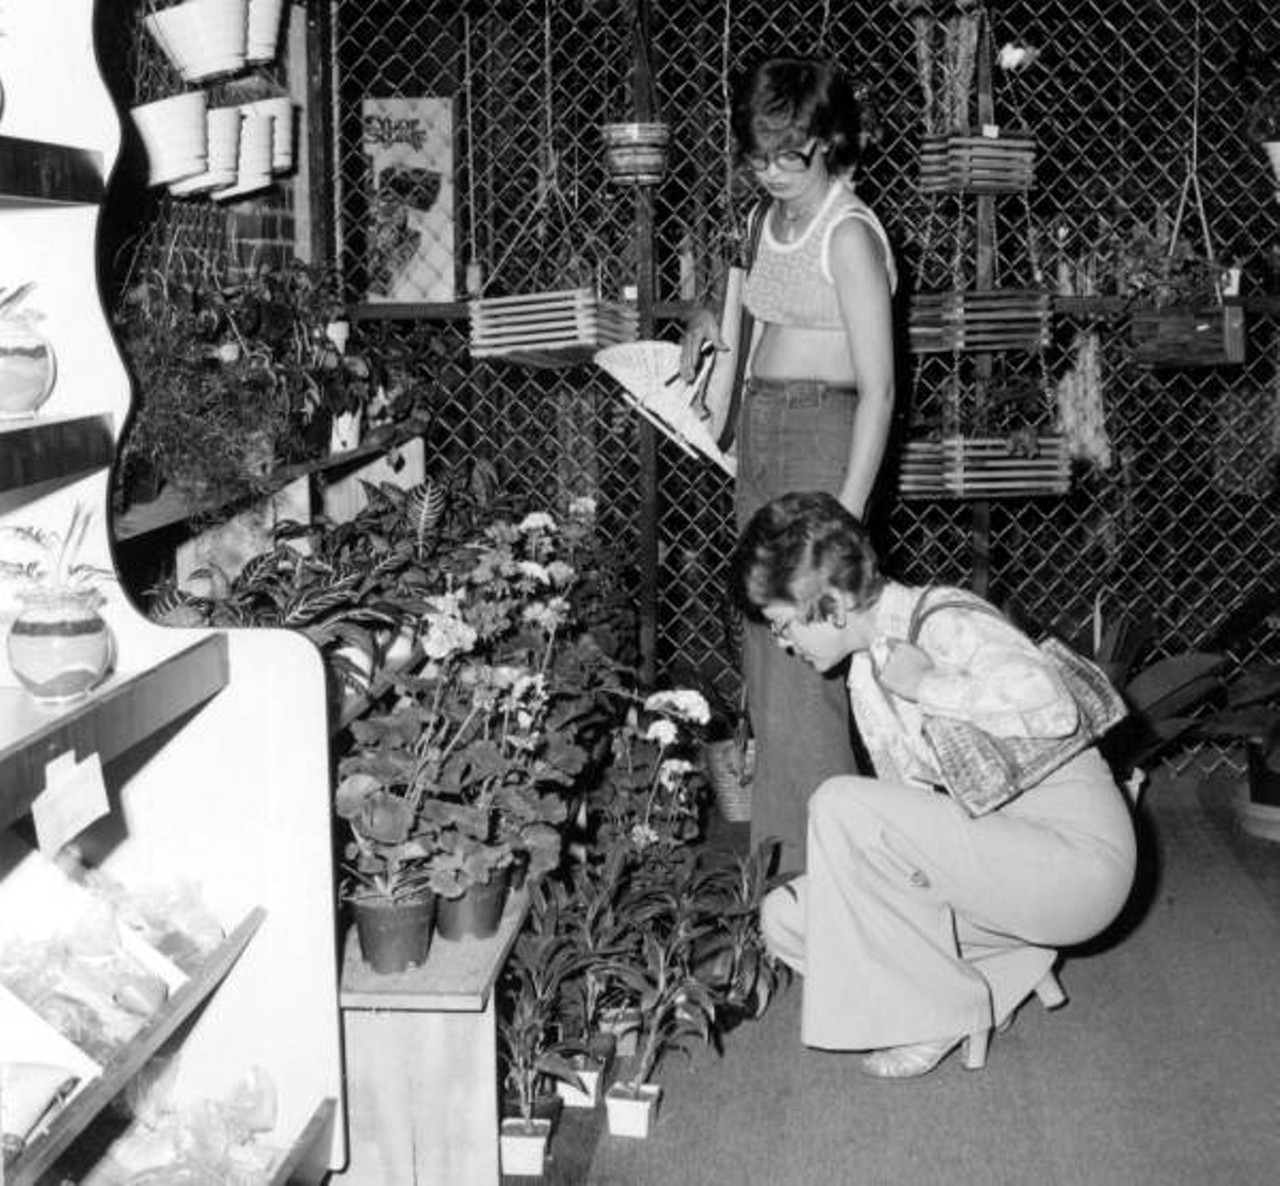 Shopping in the "nostalgia market area" in Ybor City - Tampa, Florida (1975).